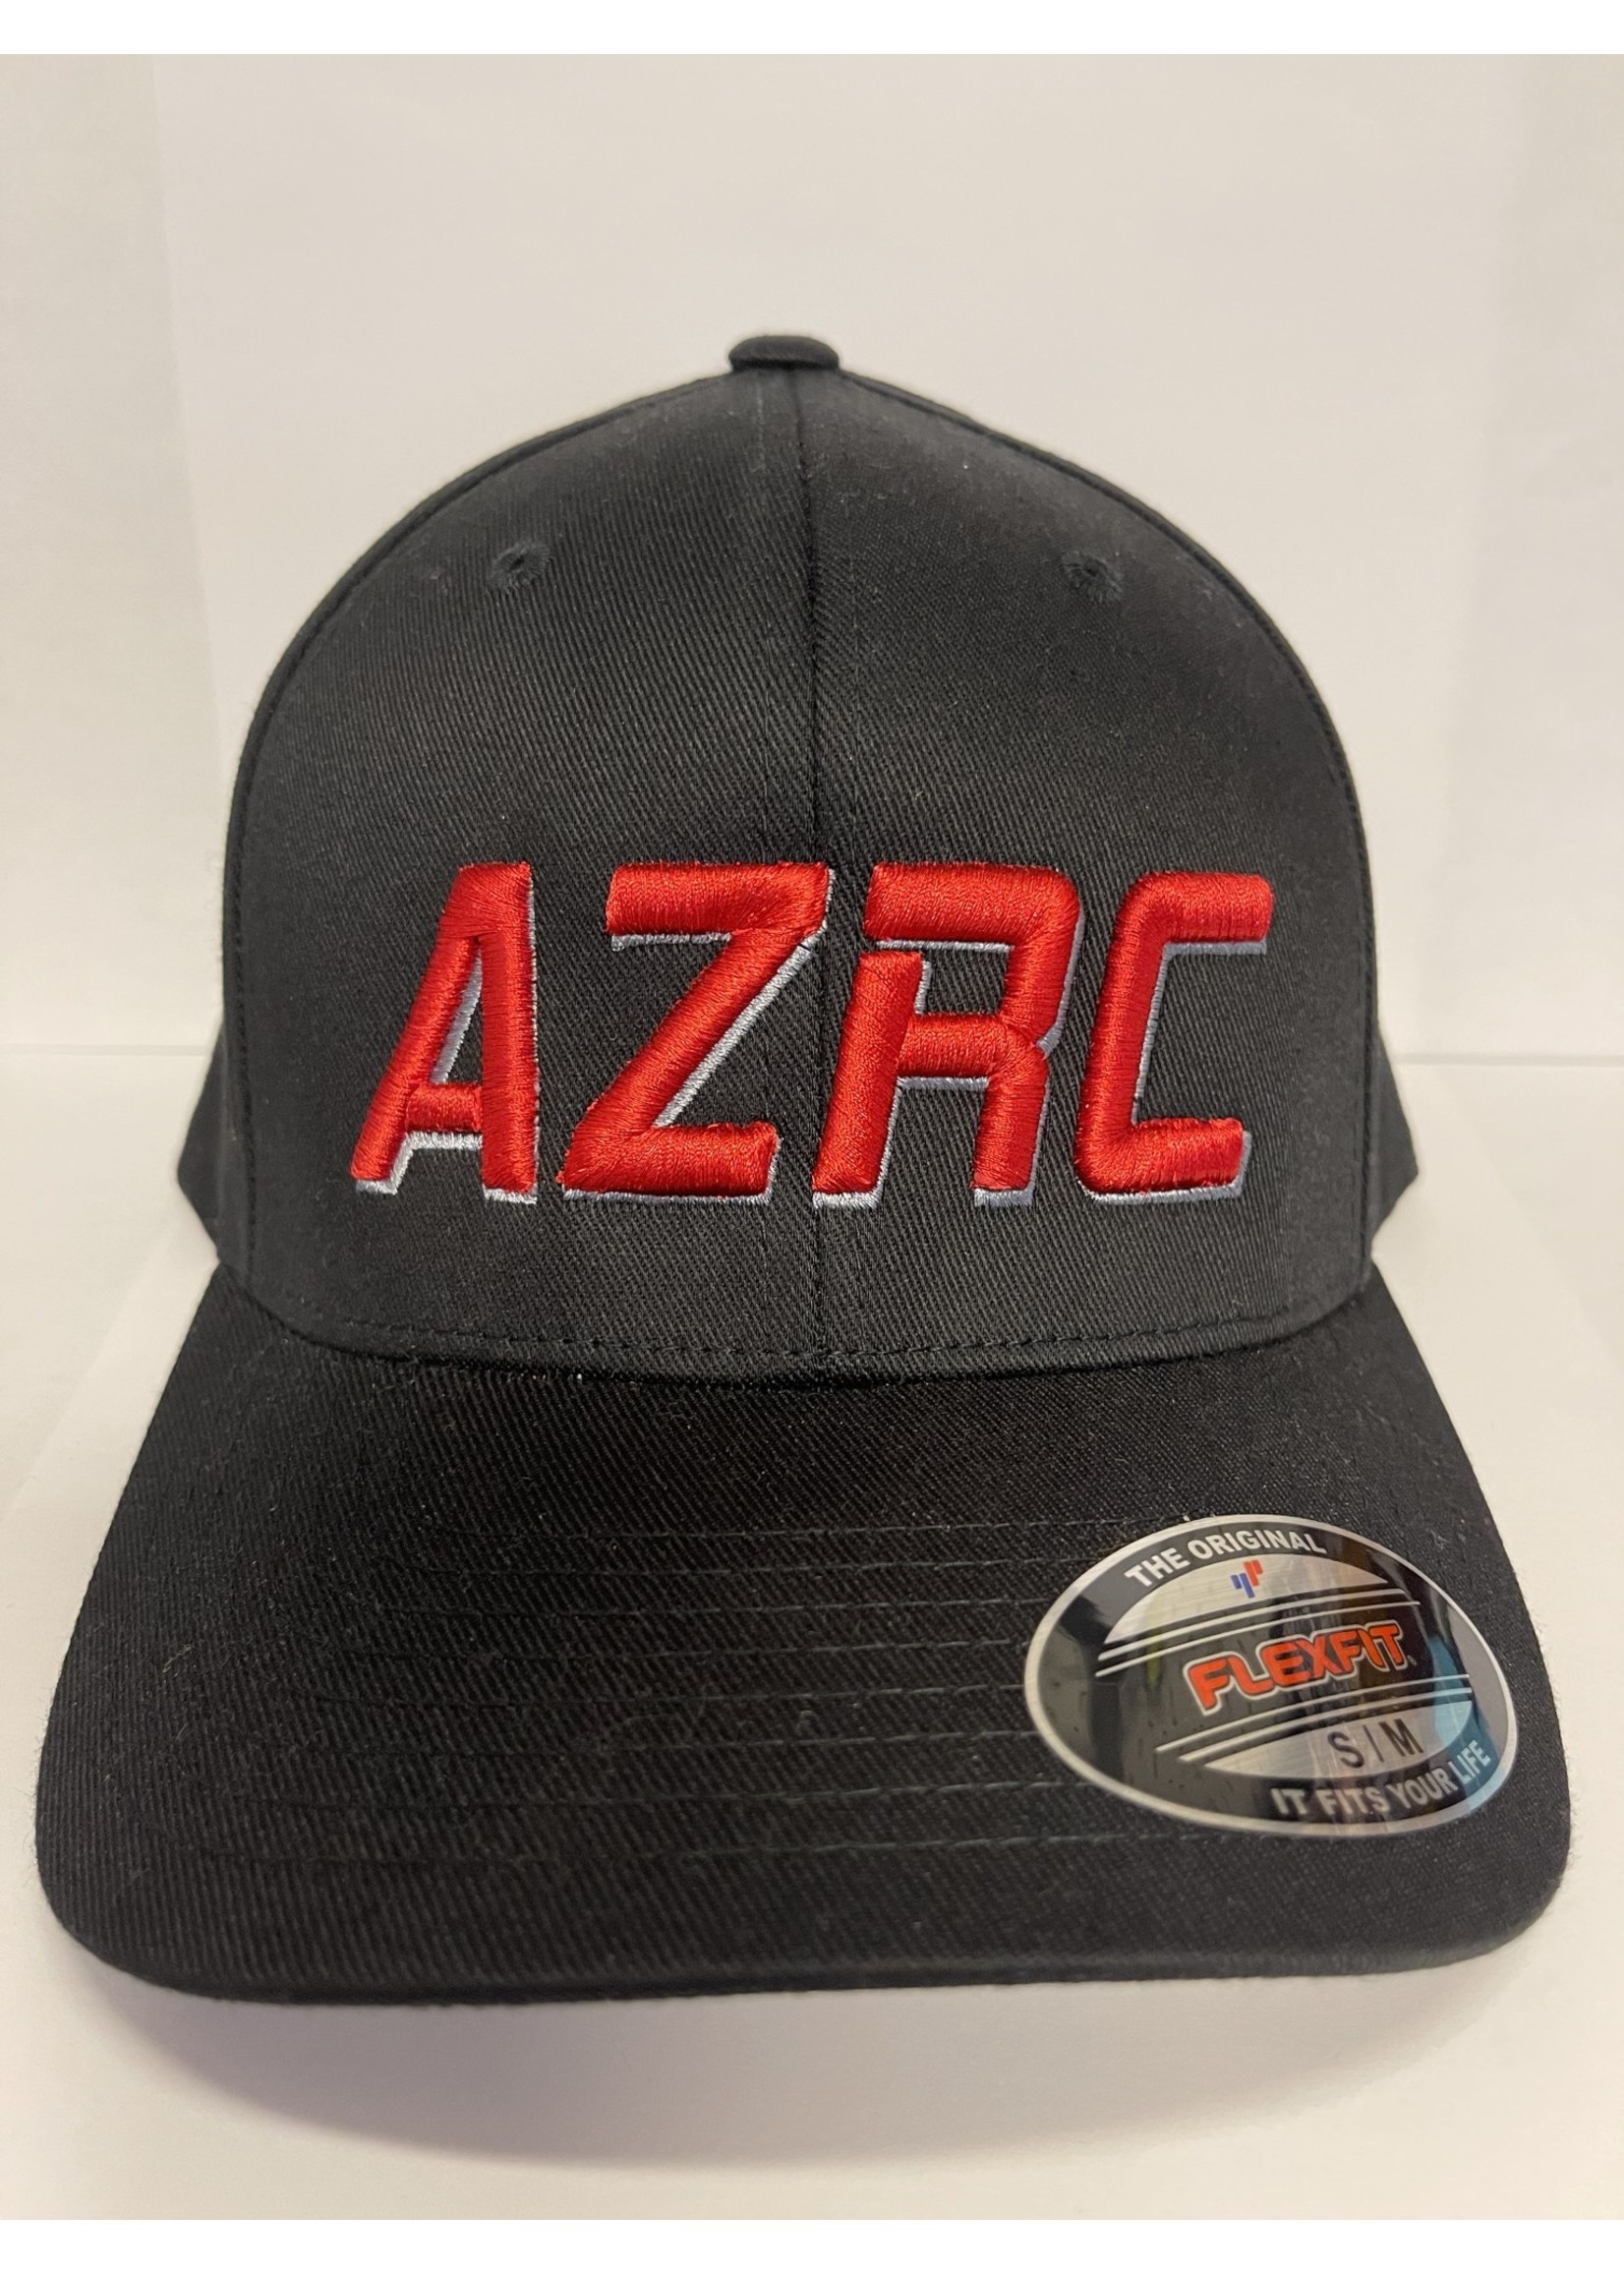 AZRC AZRC Flexfit Hat Black /Red (S/M)